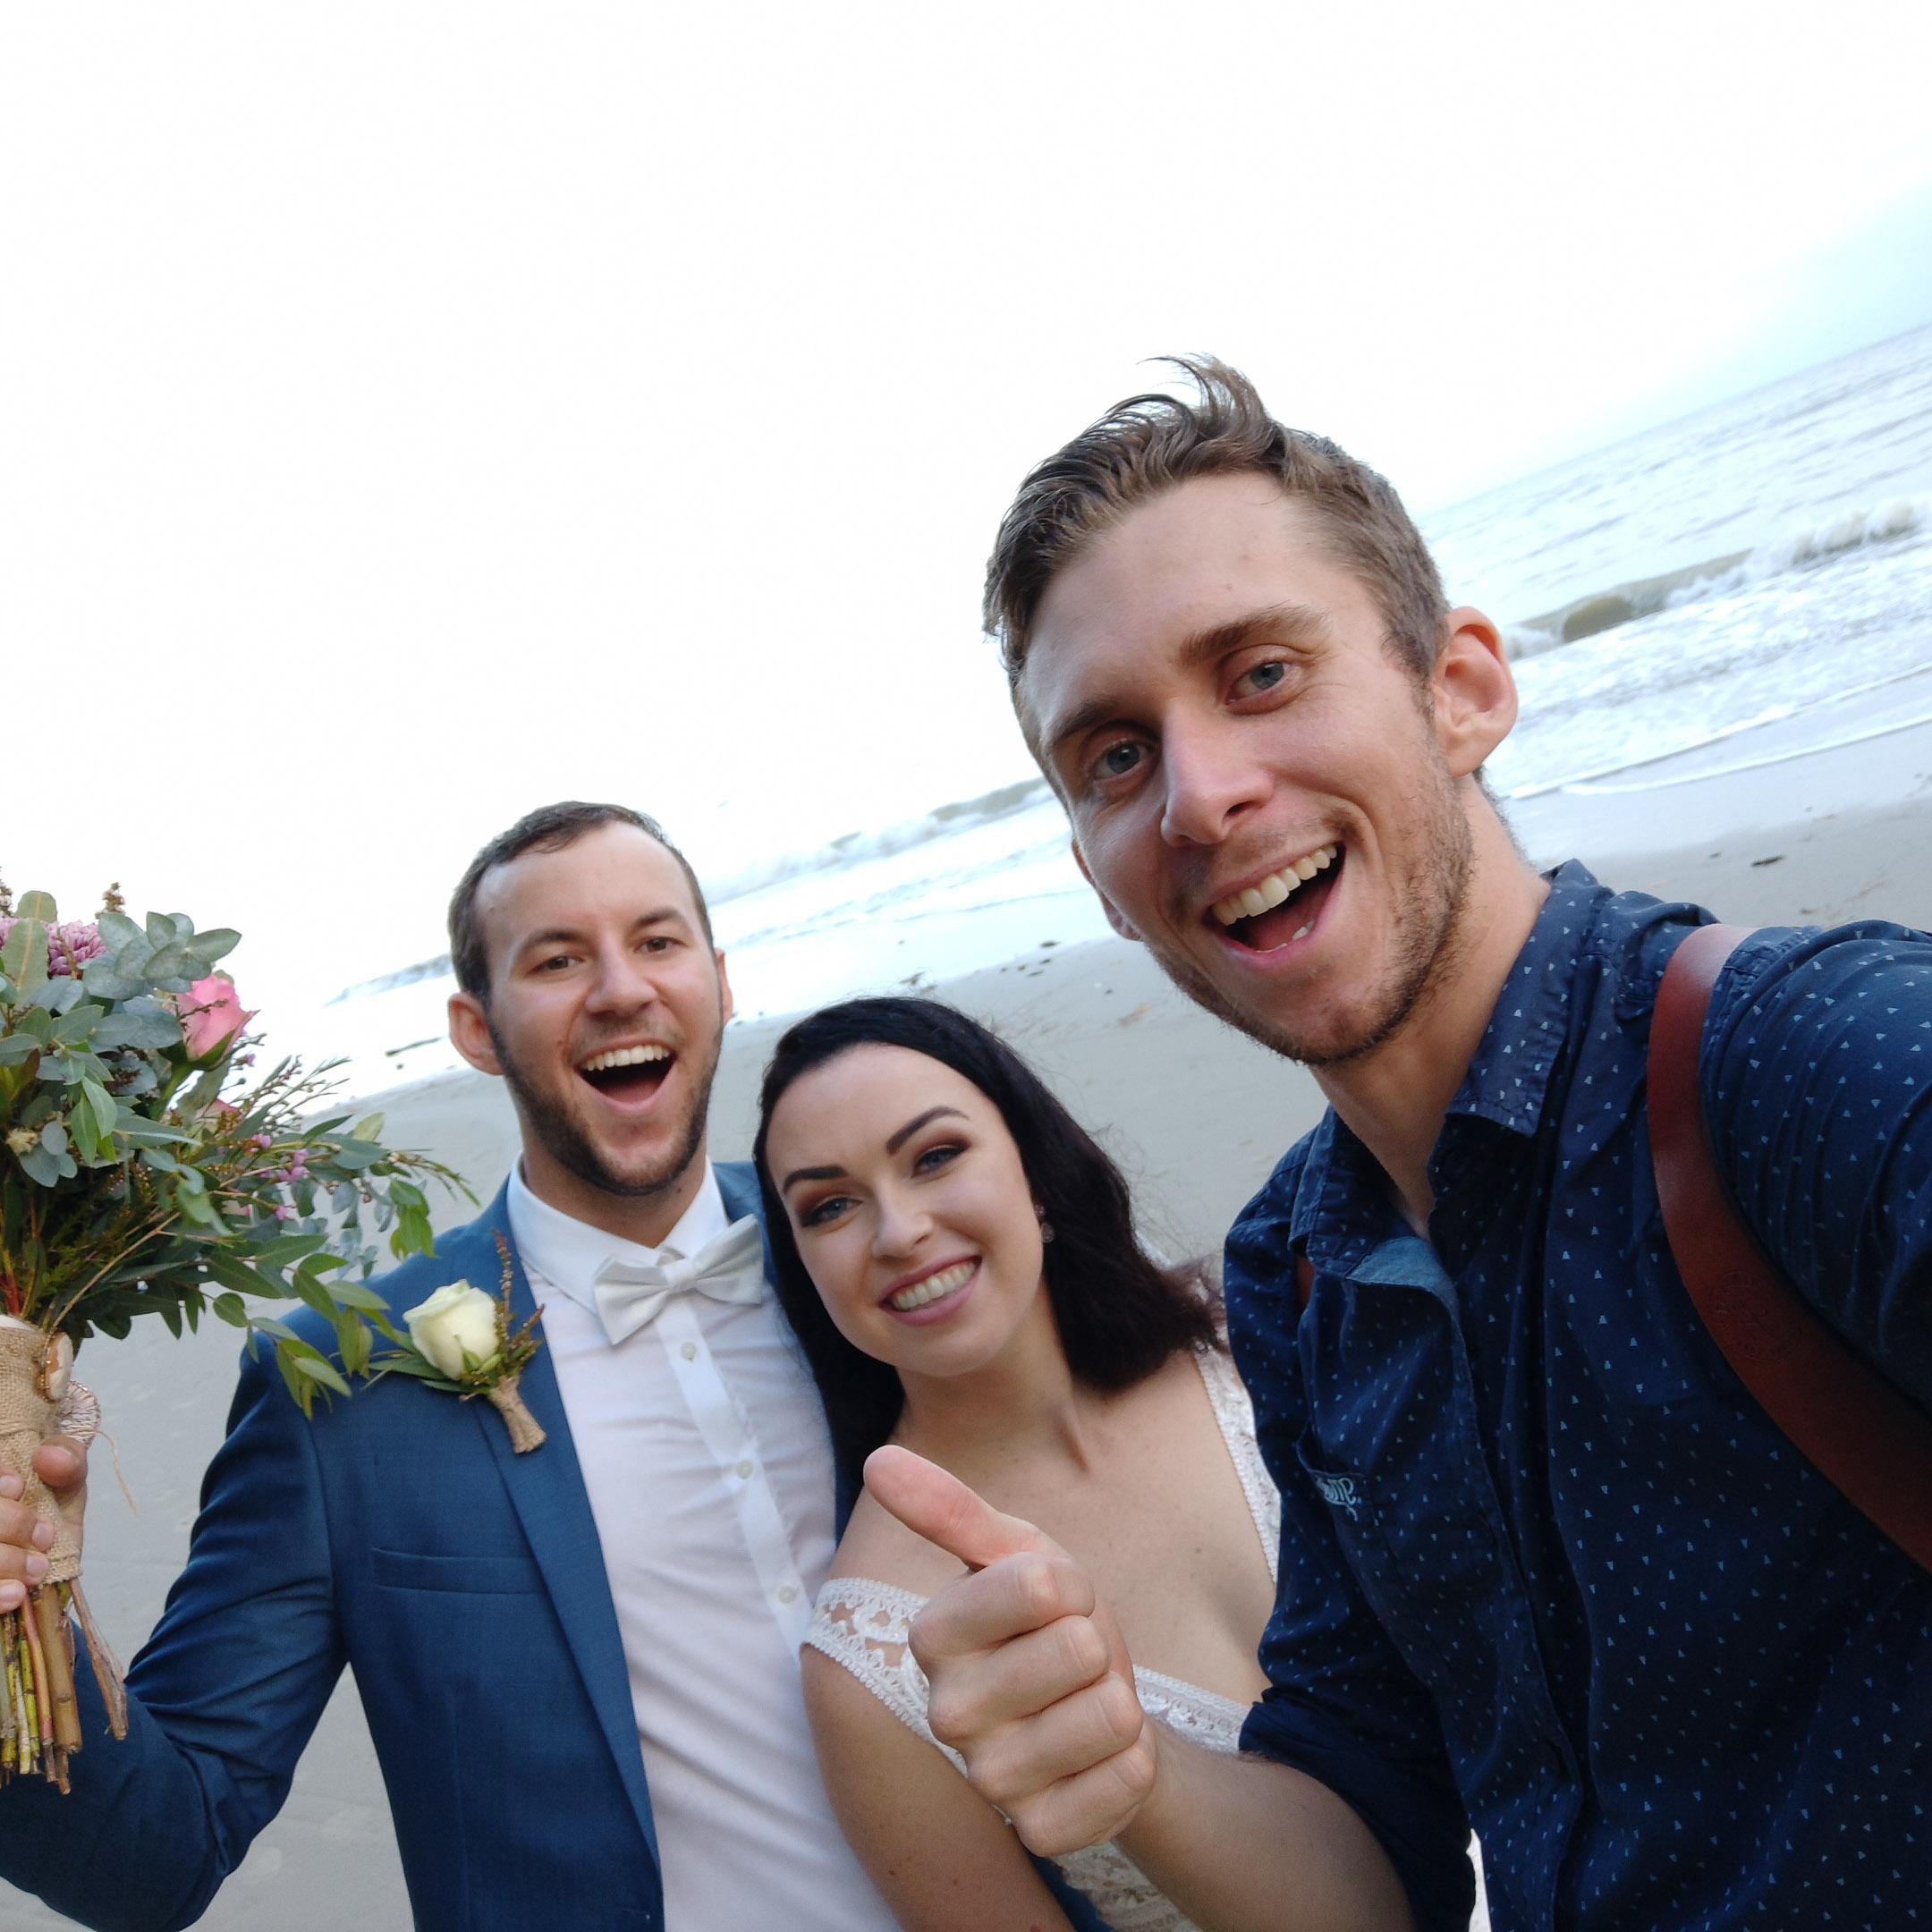 The-raw-photographer-cairns-wedding-photography-bridalparty-selfie-5.jpg